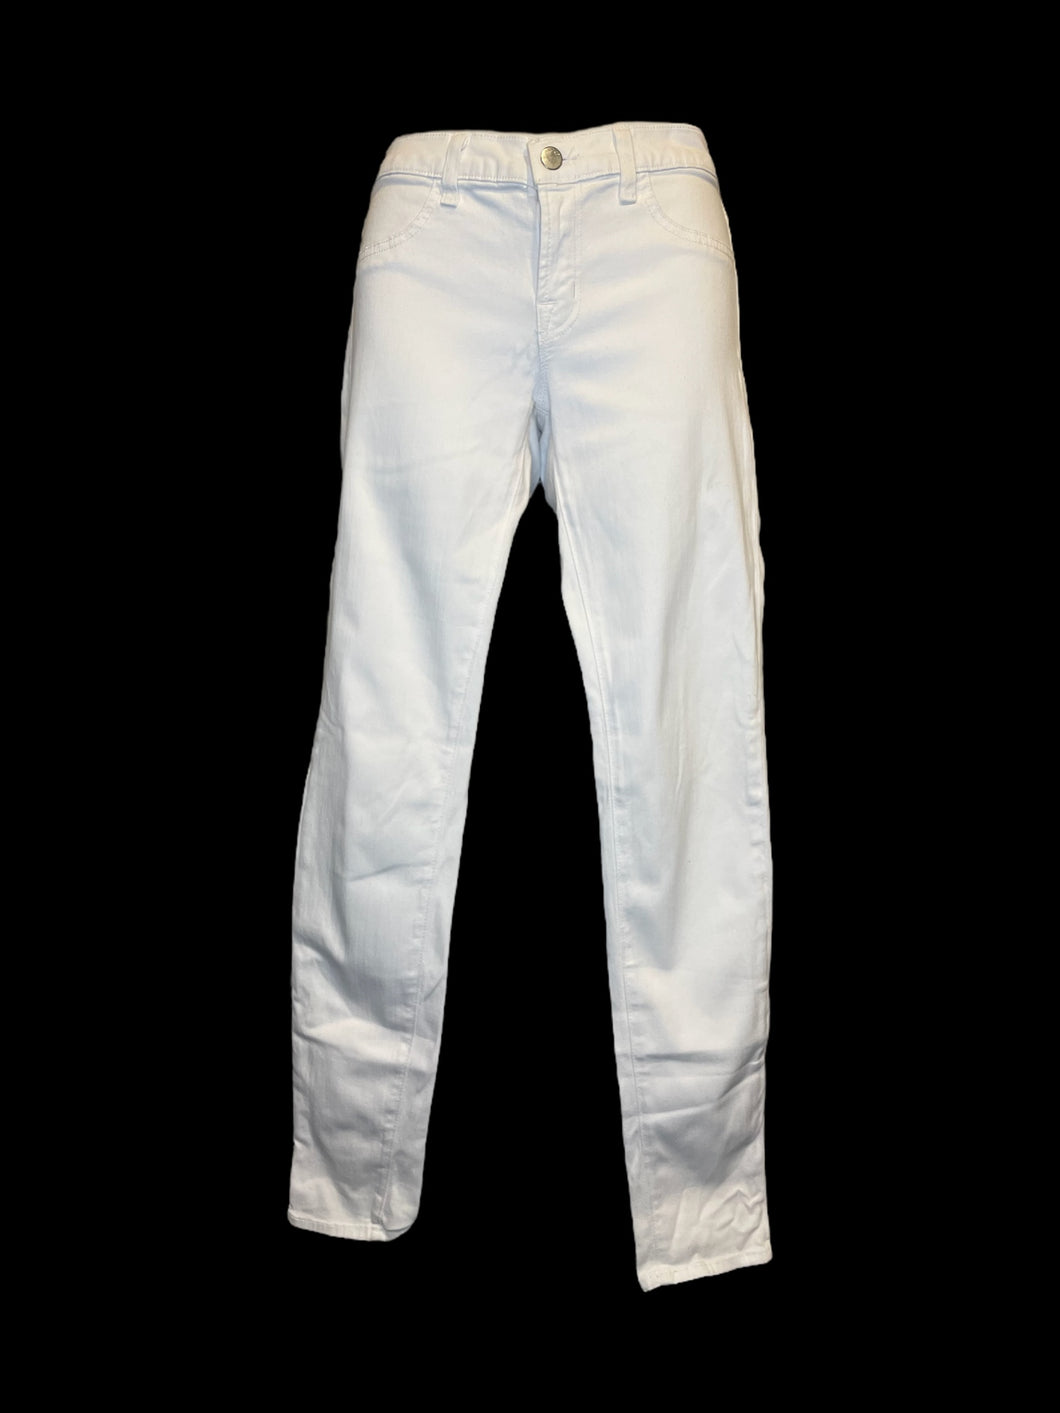 S White denim taper leg pants w/ pockets, belt loops, & button/zipper closure